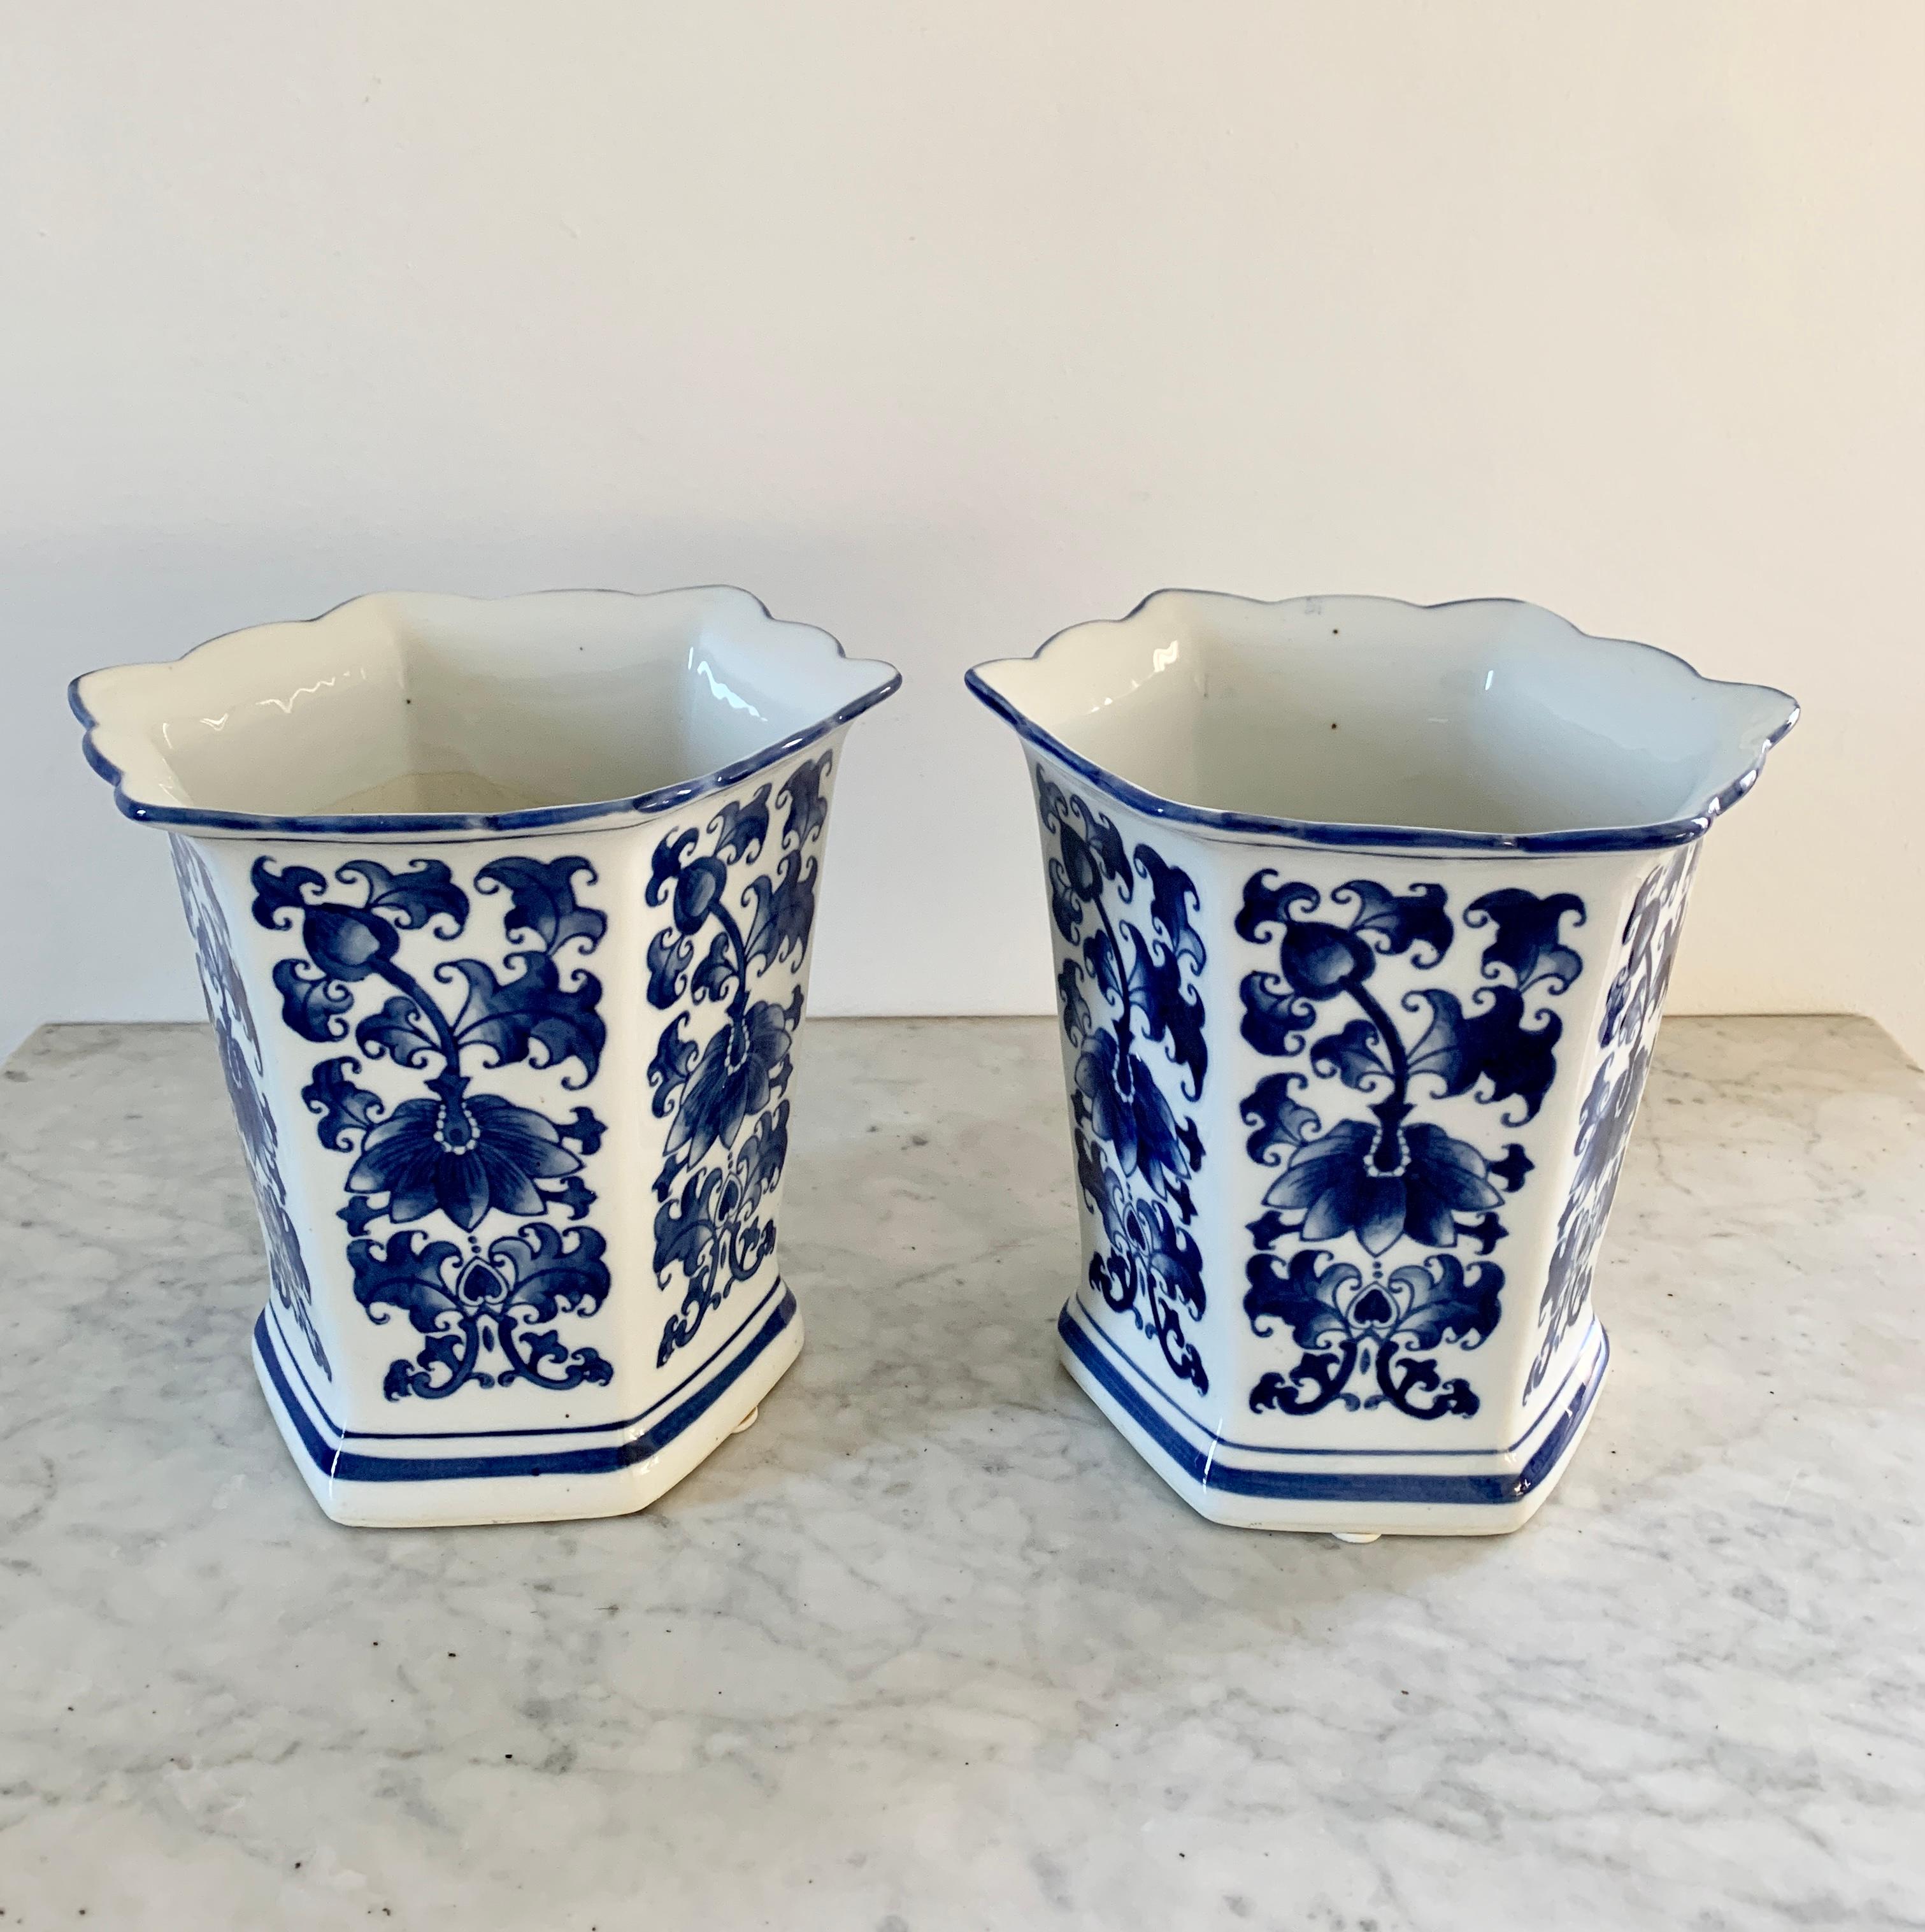 20th Century Chinoiserie Blue and White Porcelain Hexagonal Vases, Pair